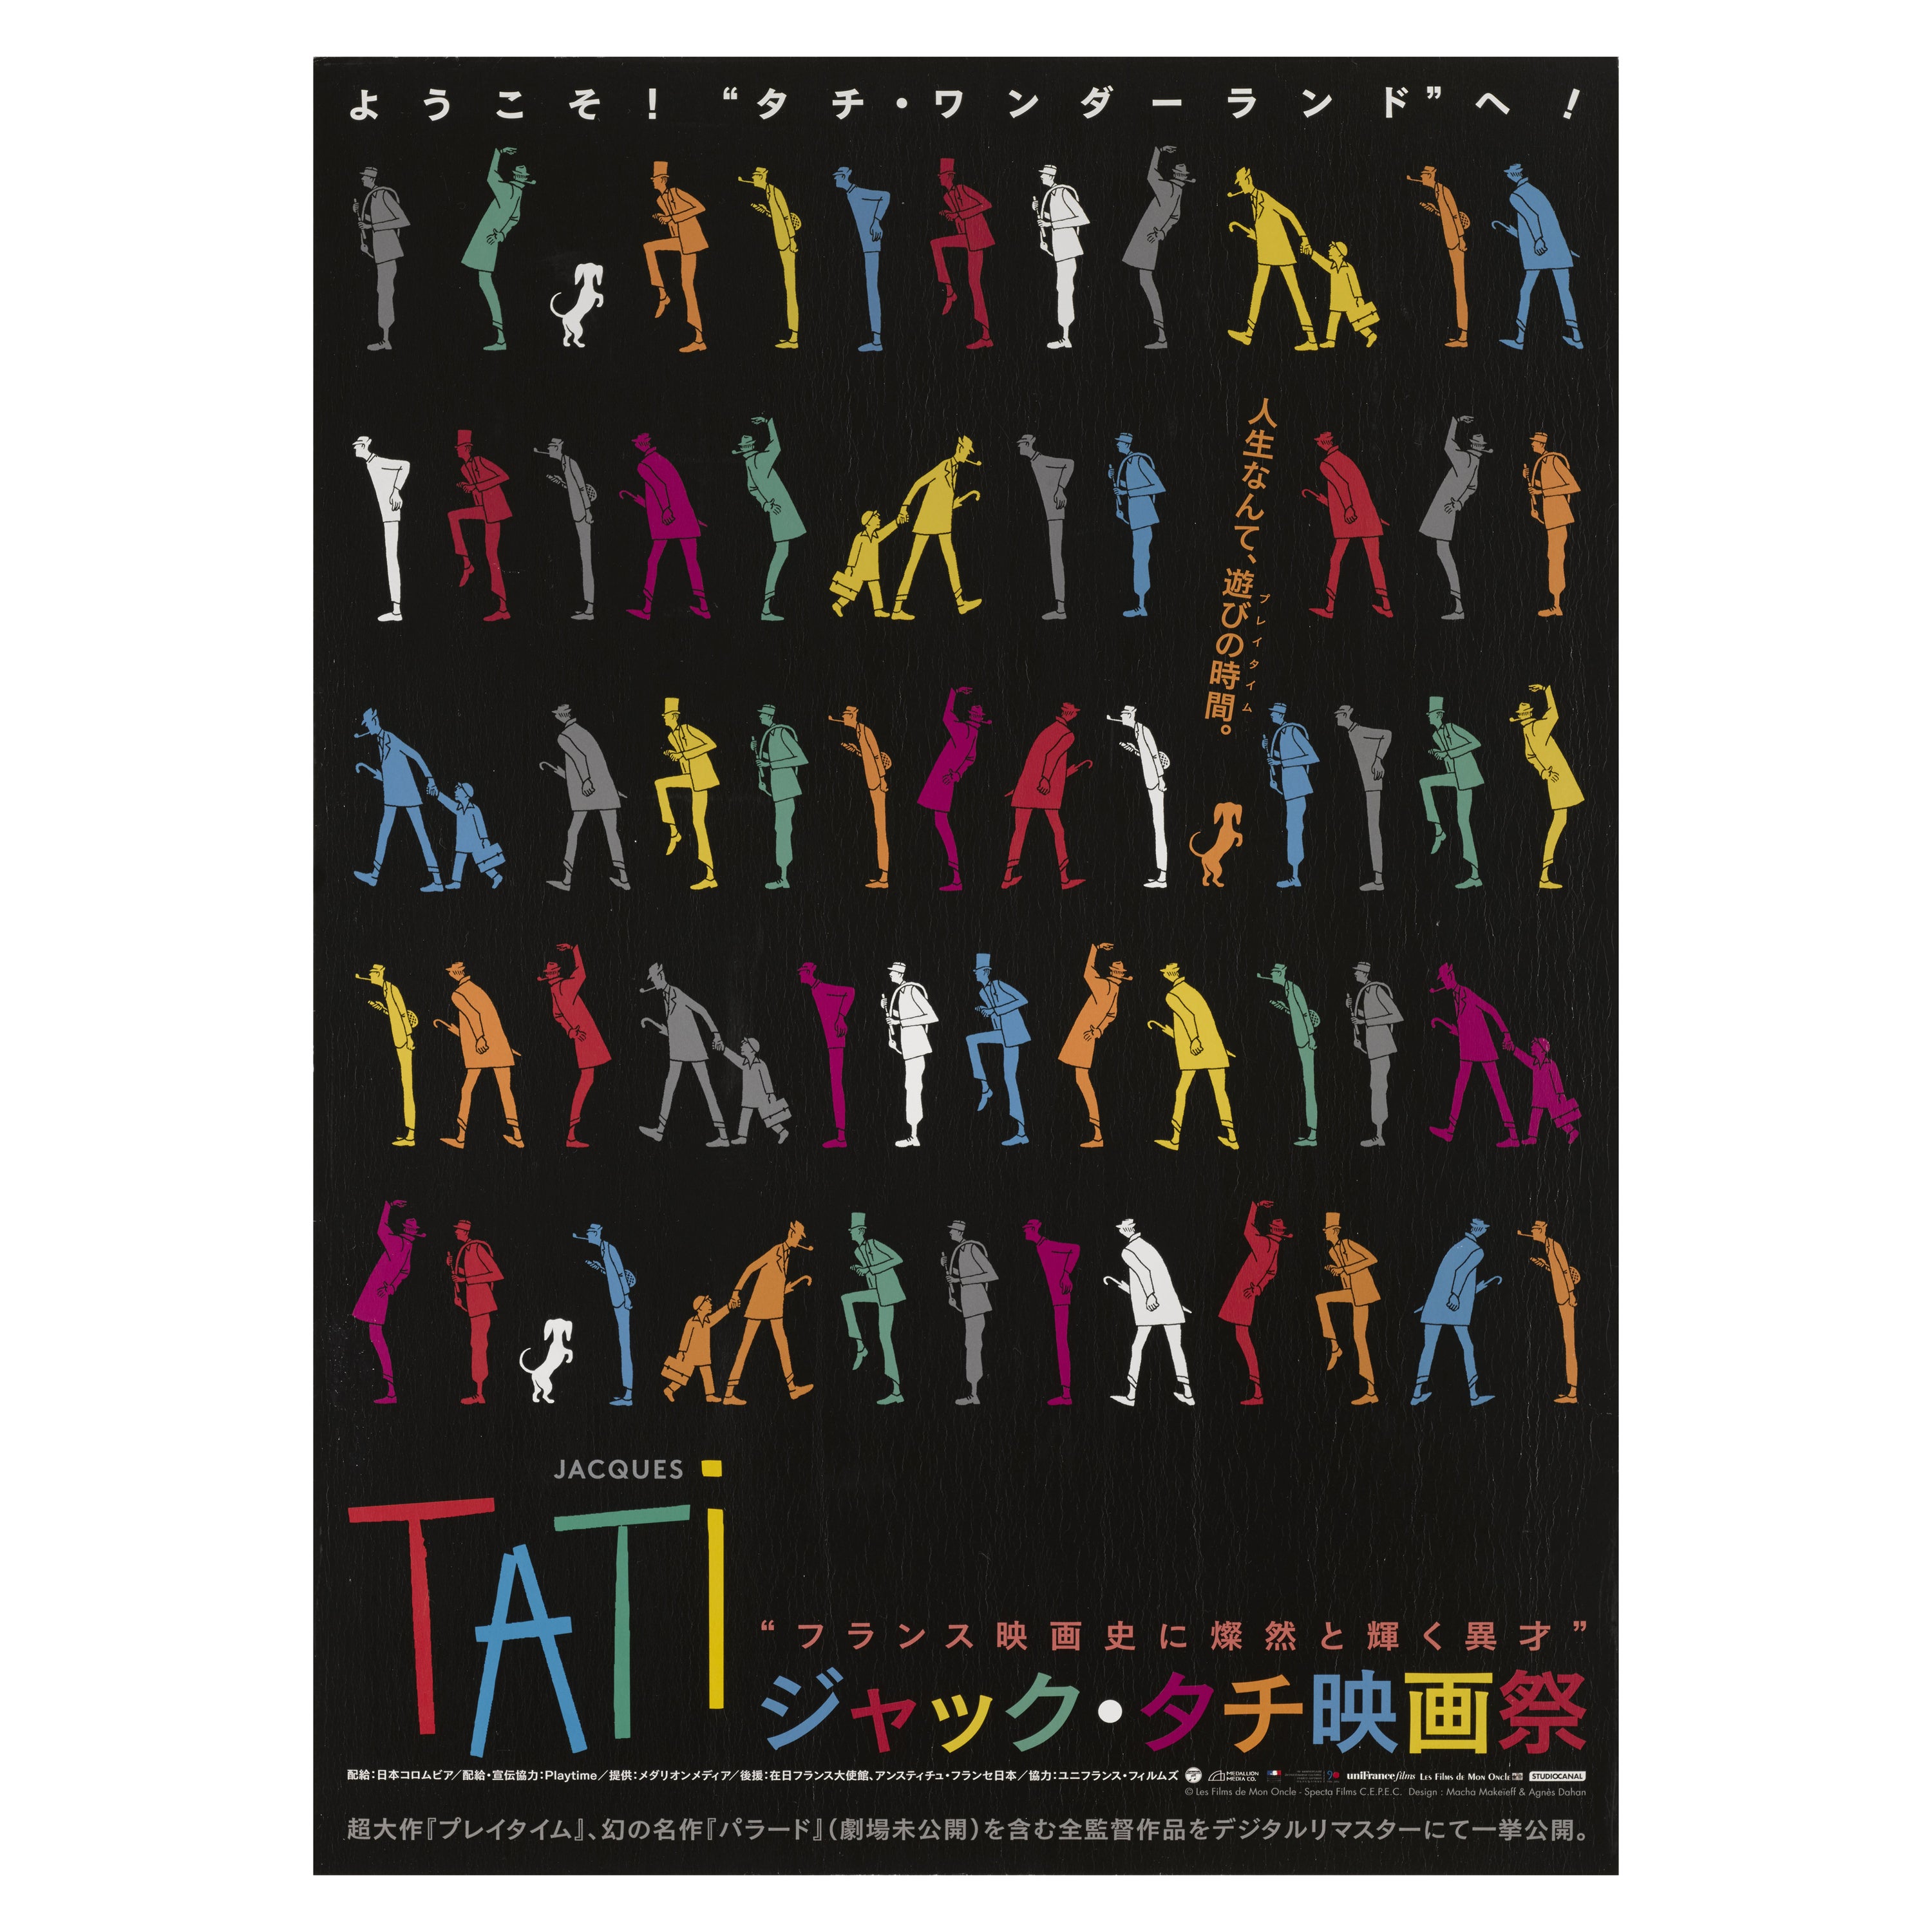 Filmfestival von Jacques Tati im Angebot